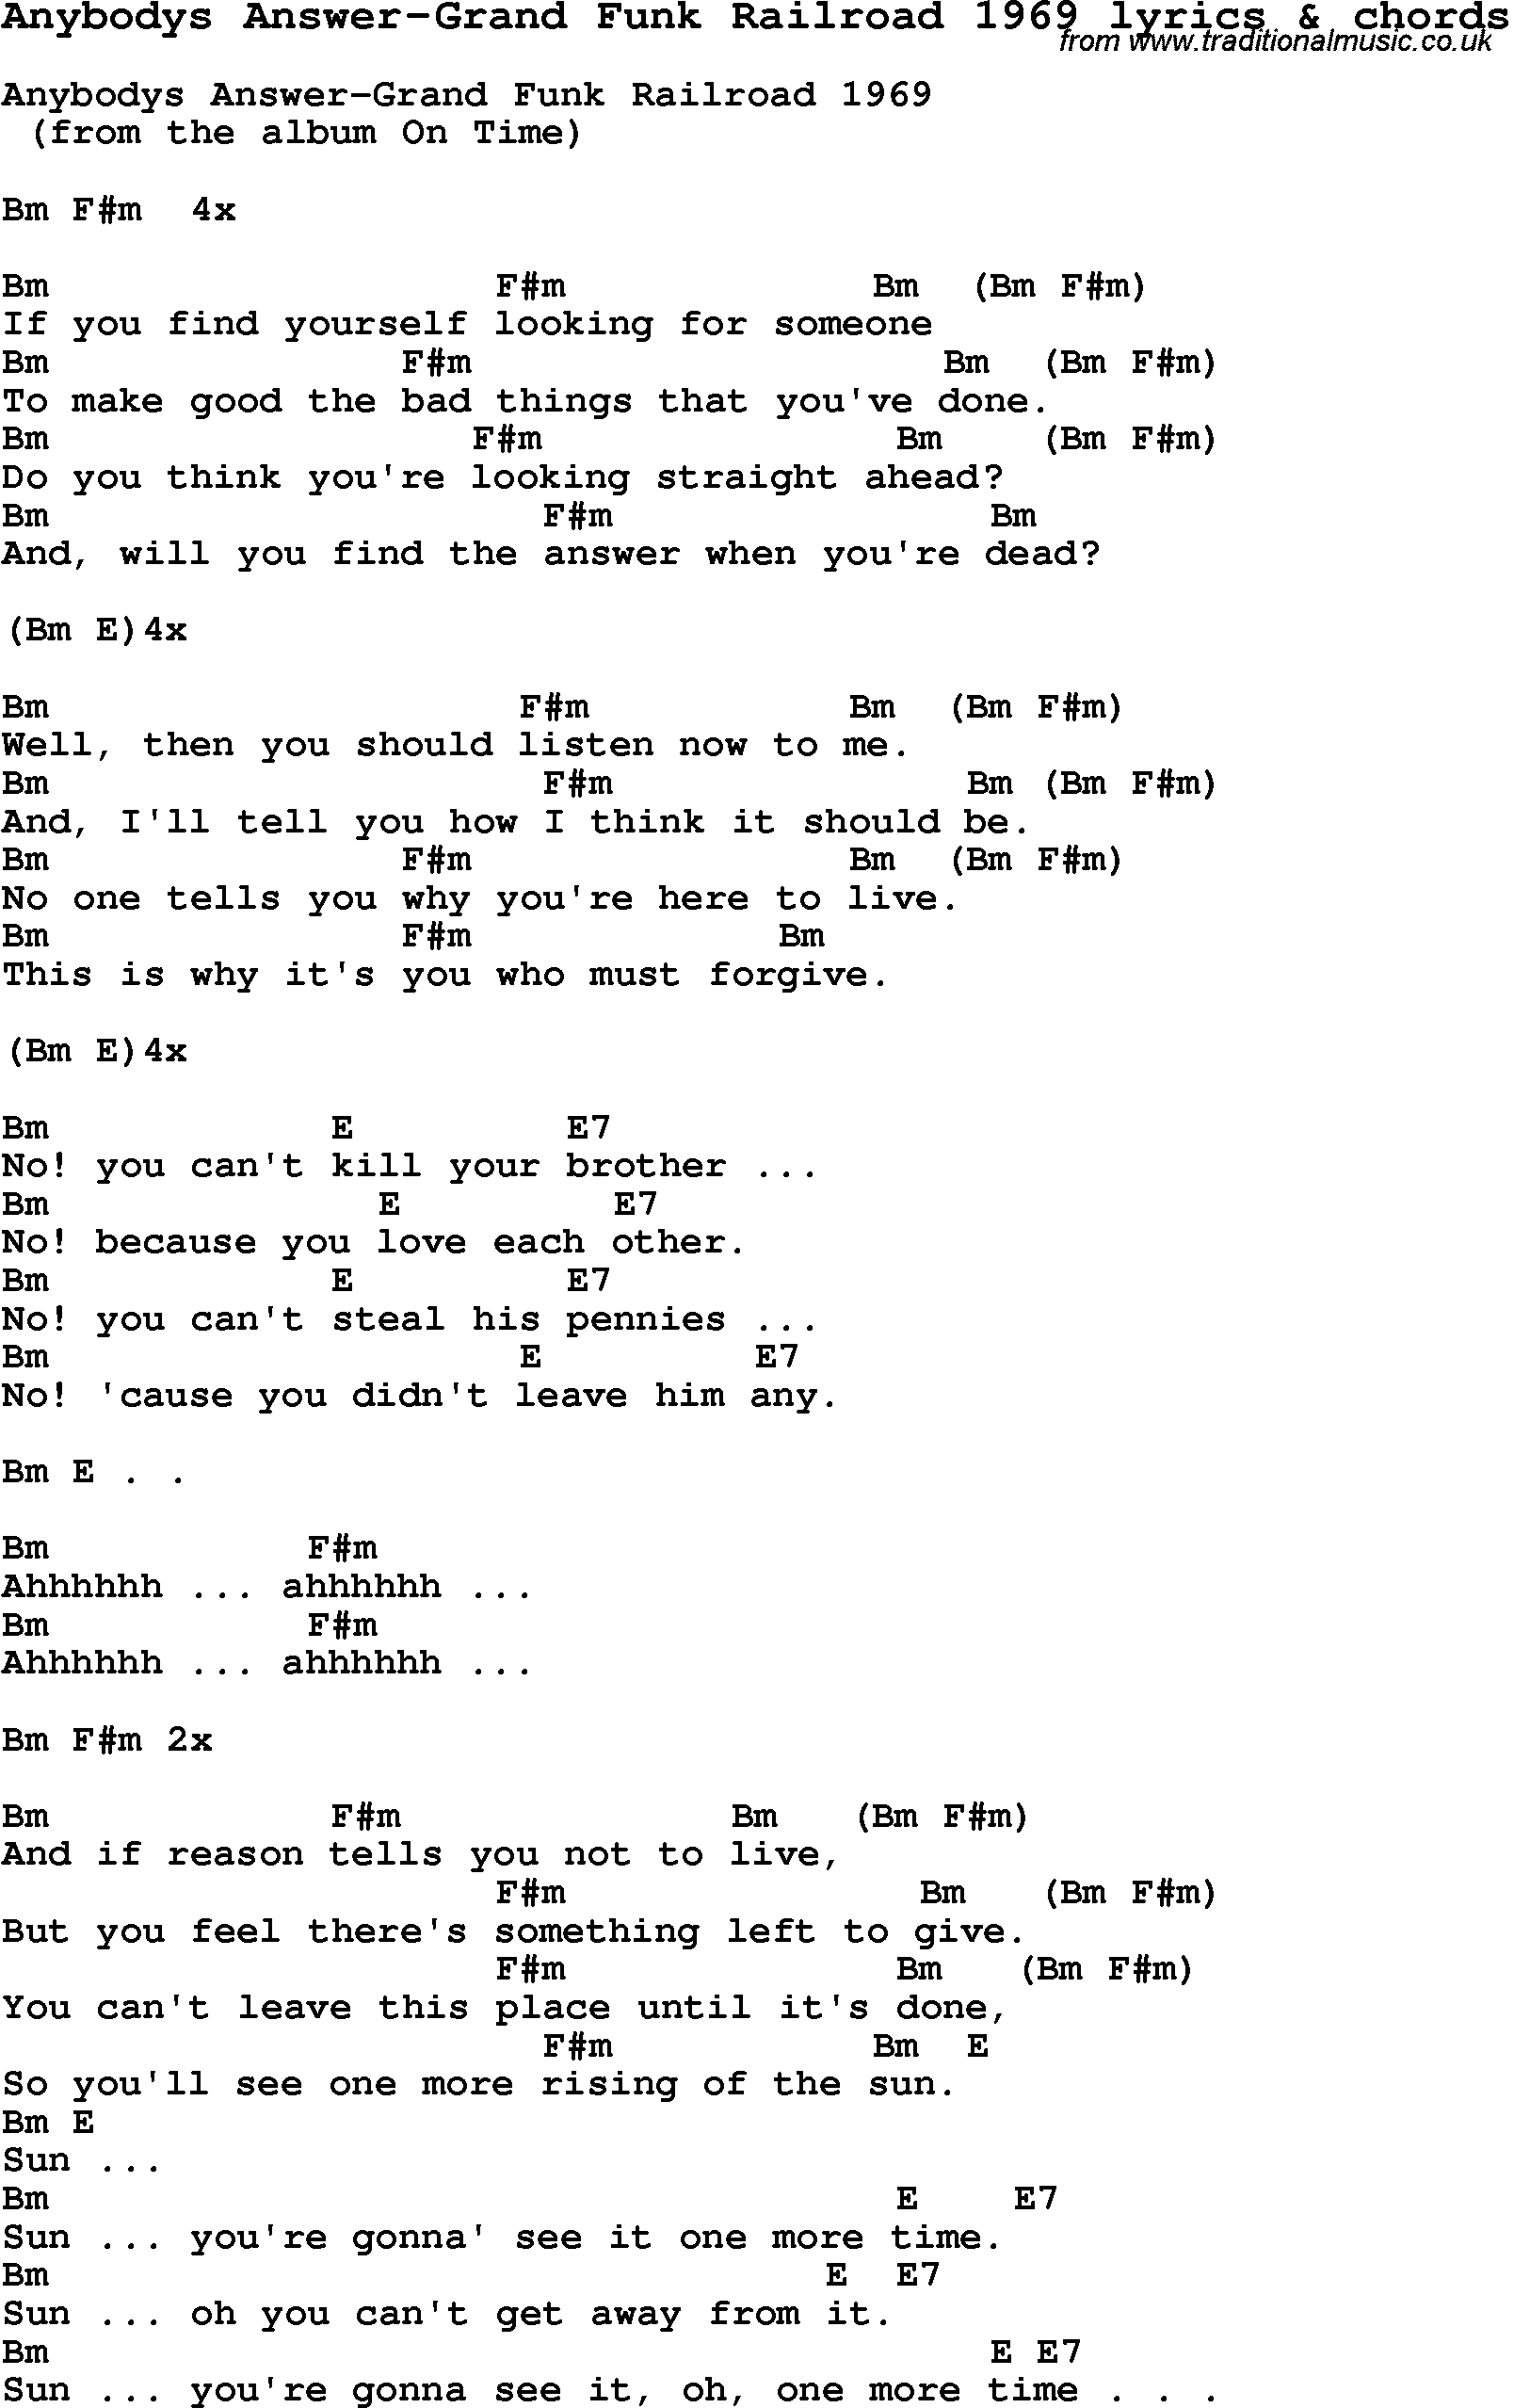 Love Song Lyrics for: Anybodys Answer-Grand Funk Railroad 1969 with chords for Ukulele, Guitar Banjo etc.